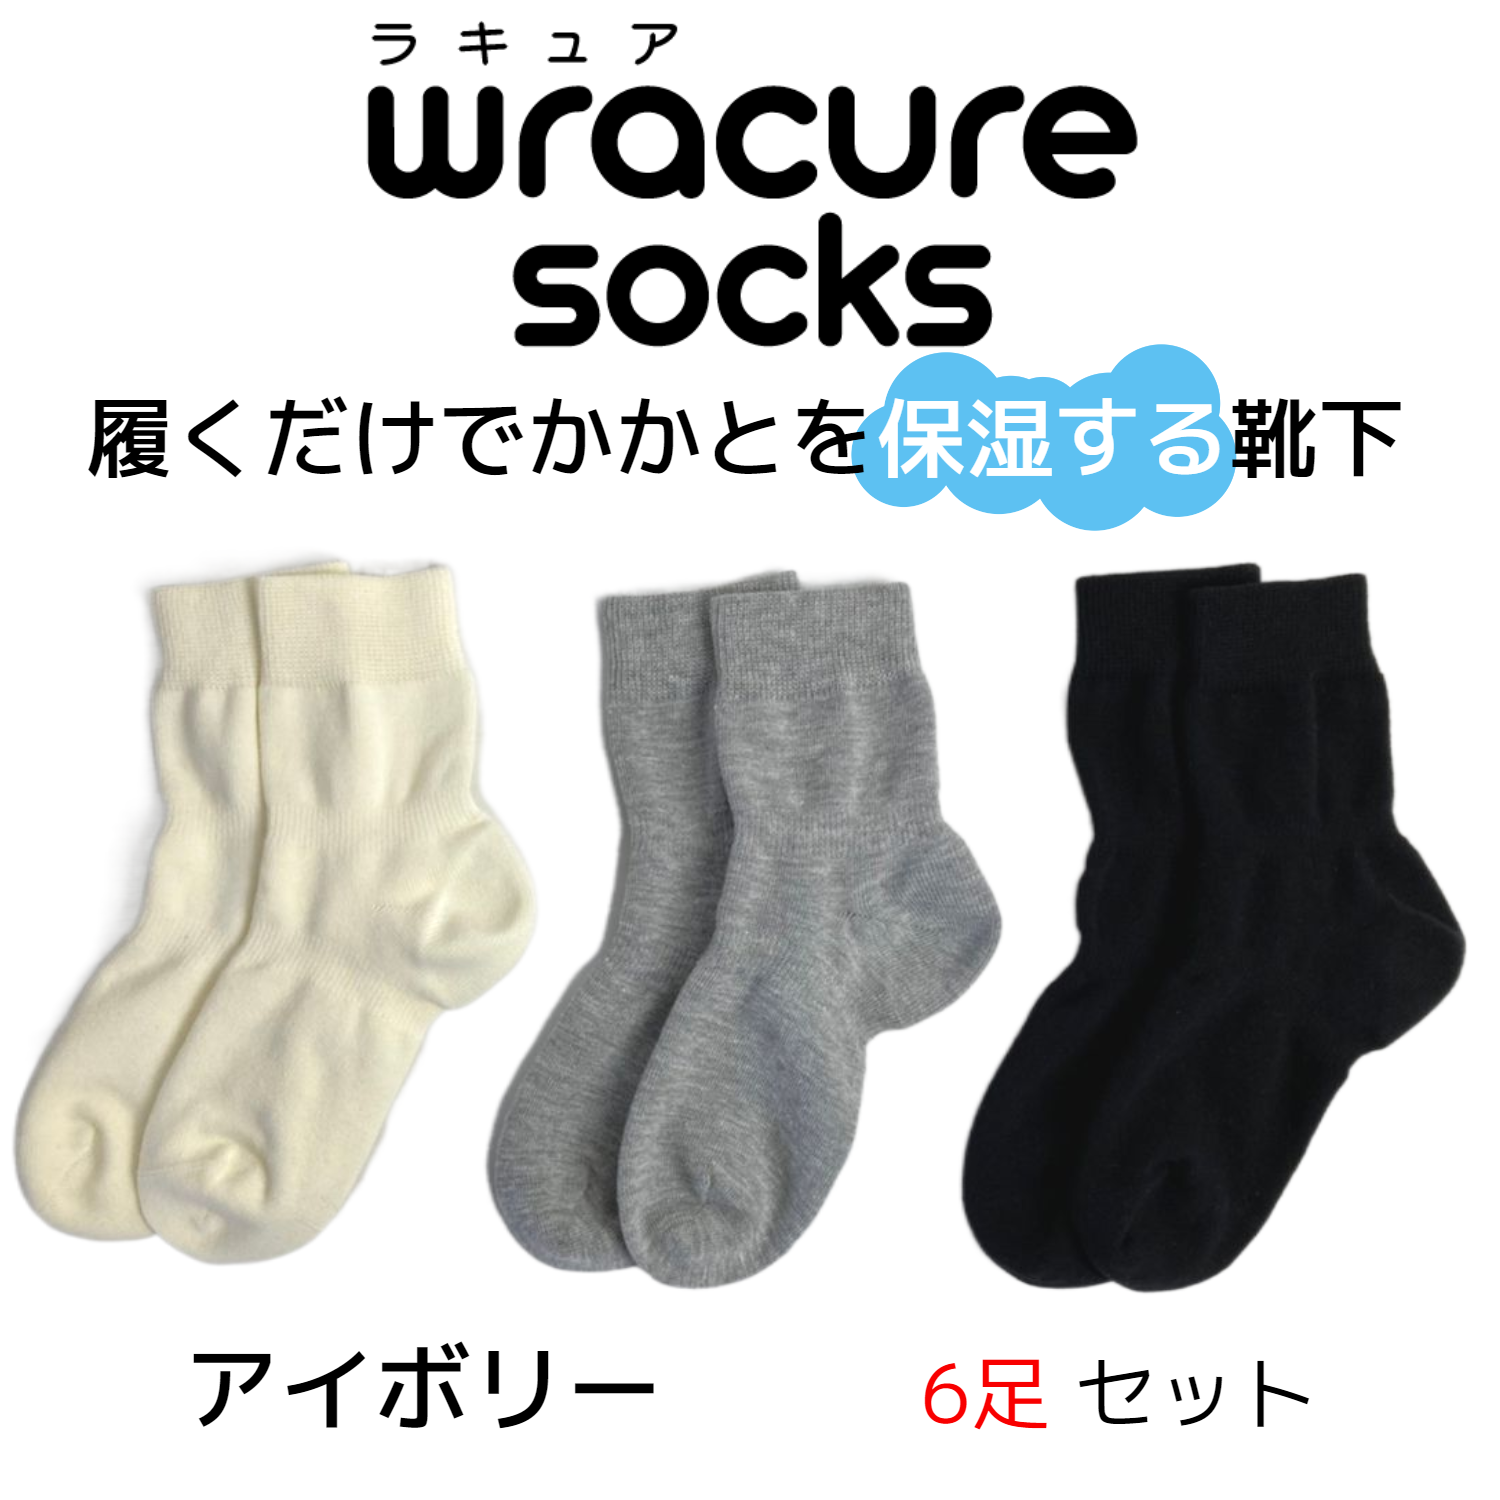 wracure socks ラキュアソックス【アイボリー 】履くだけでかかと保湿出来る靴下